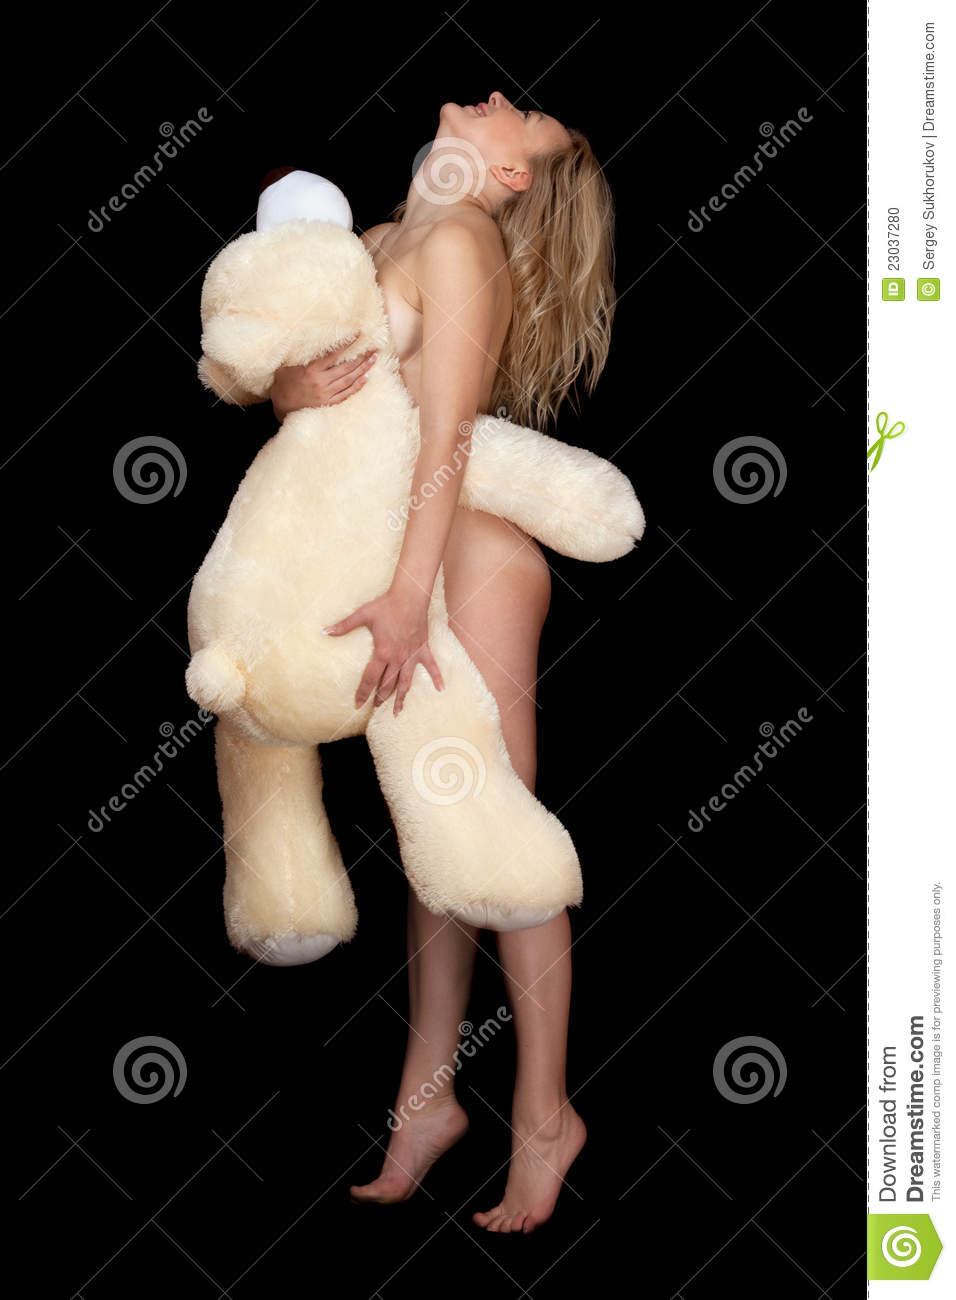 Sexy teddy bear poses